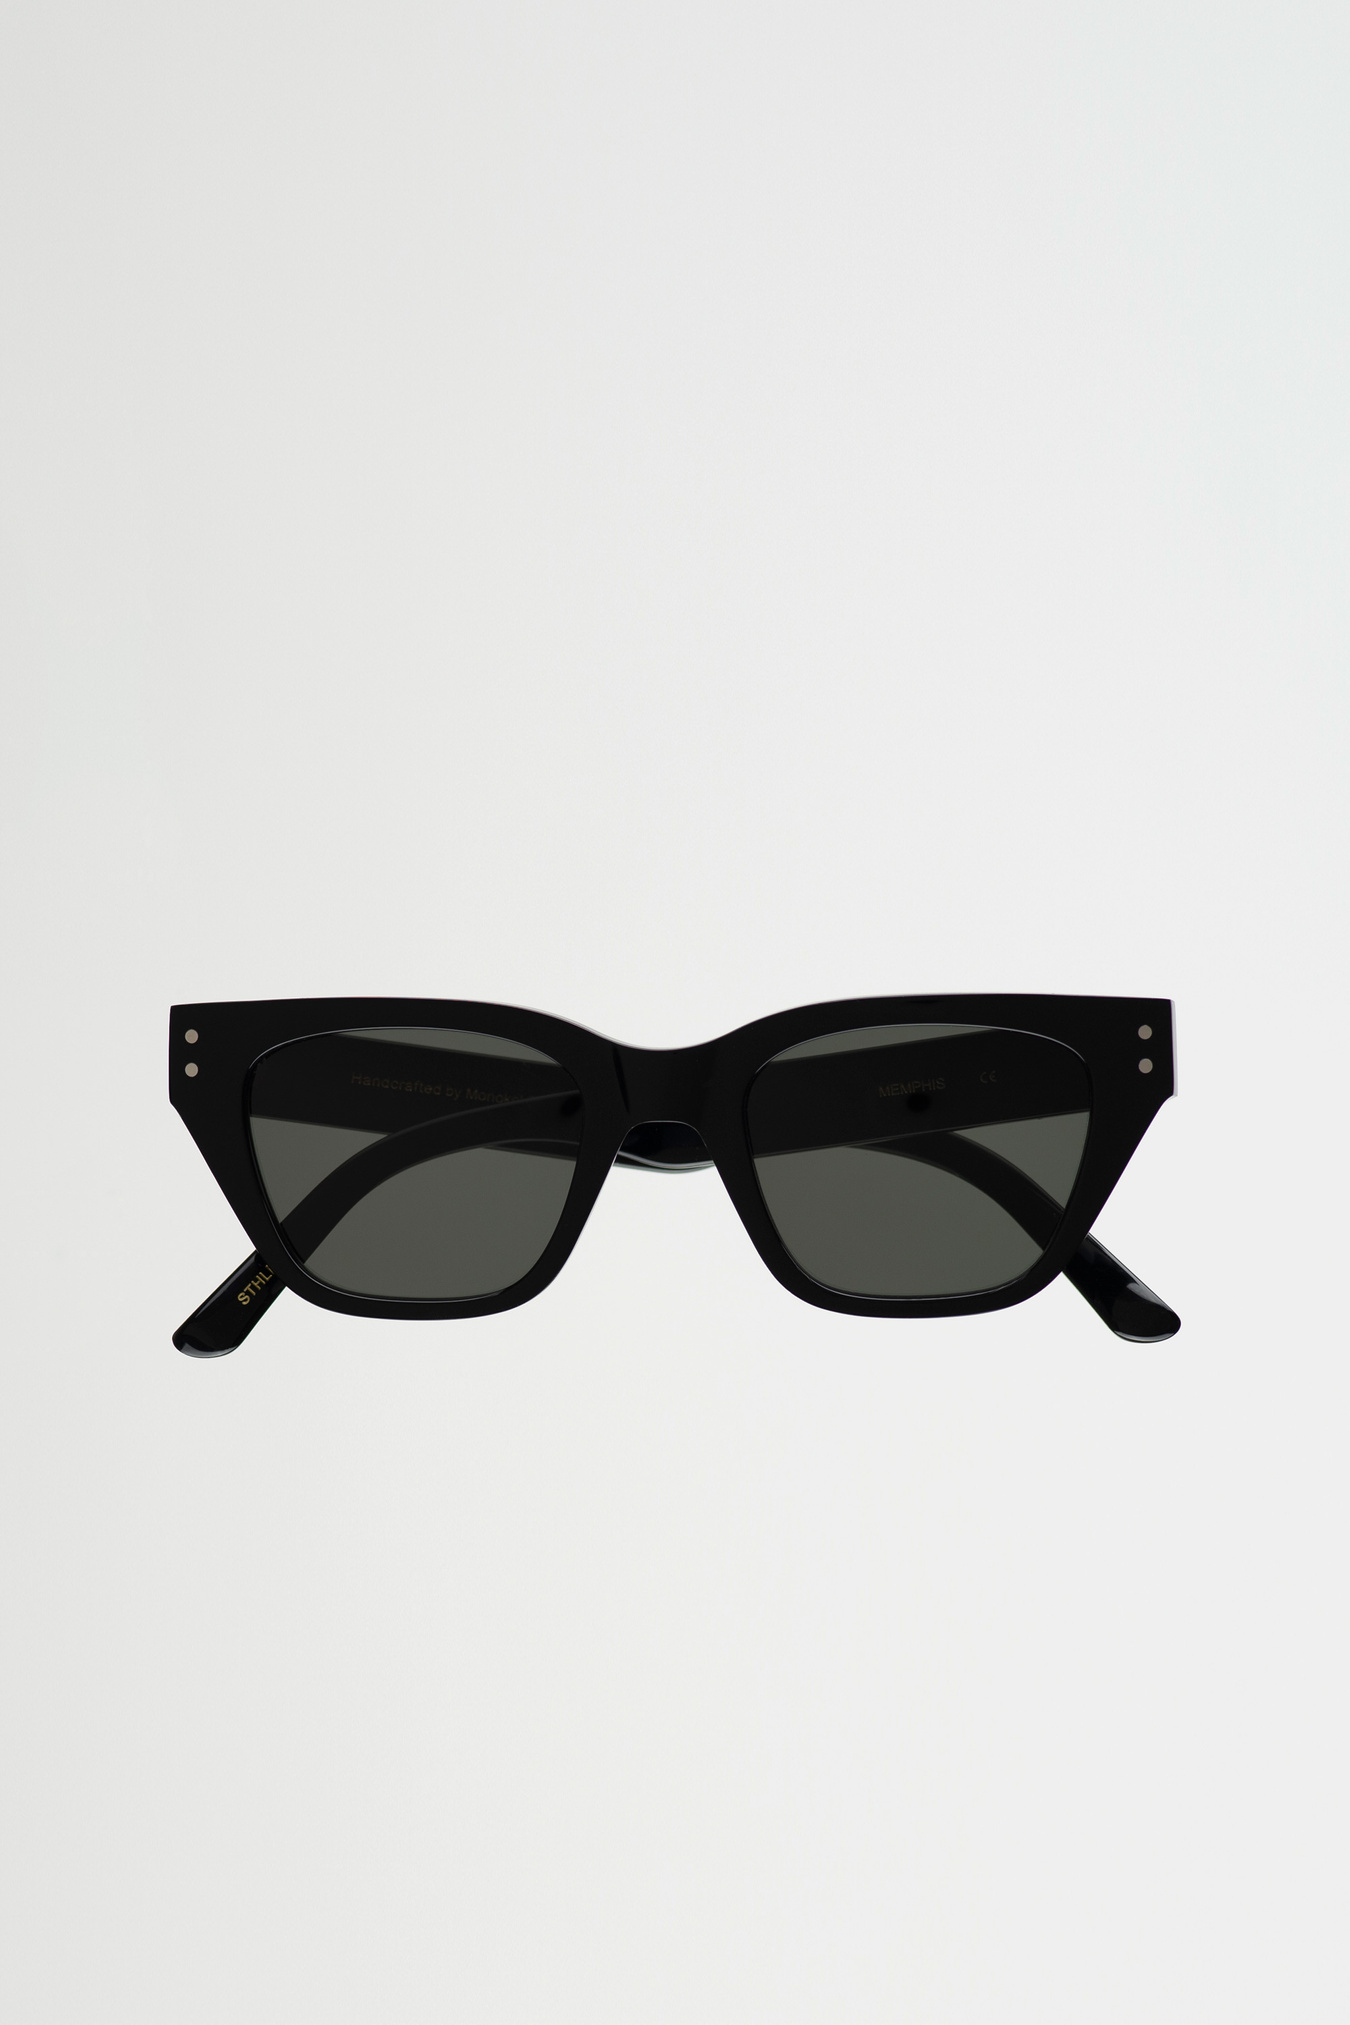 Monokel Eyewear Memphis Black - Green Solid Lens Sunglasses 